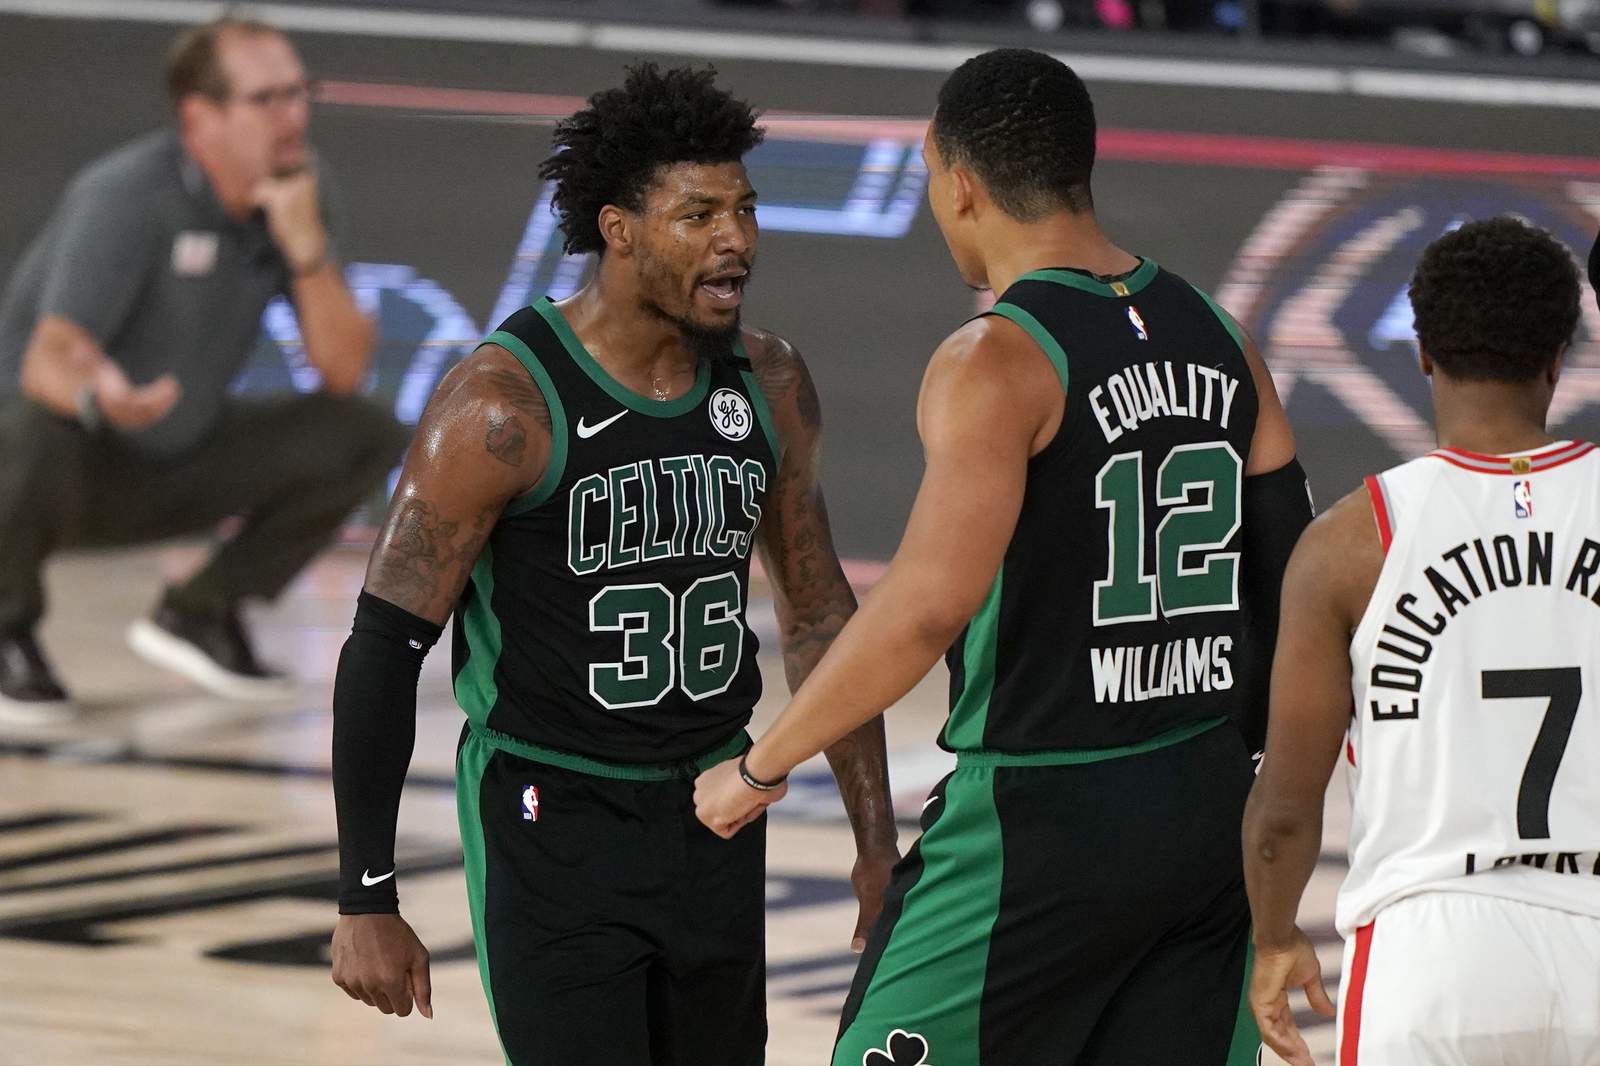 Tatum and Brown combine for 57, Celtics top Heat 111-104